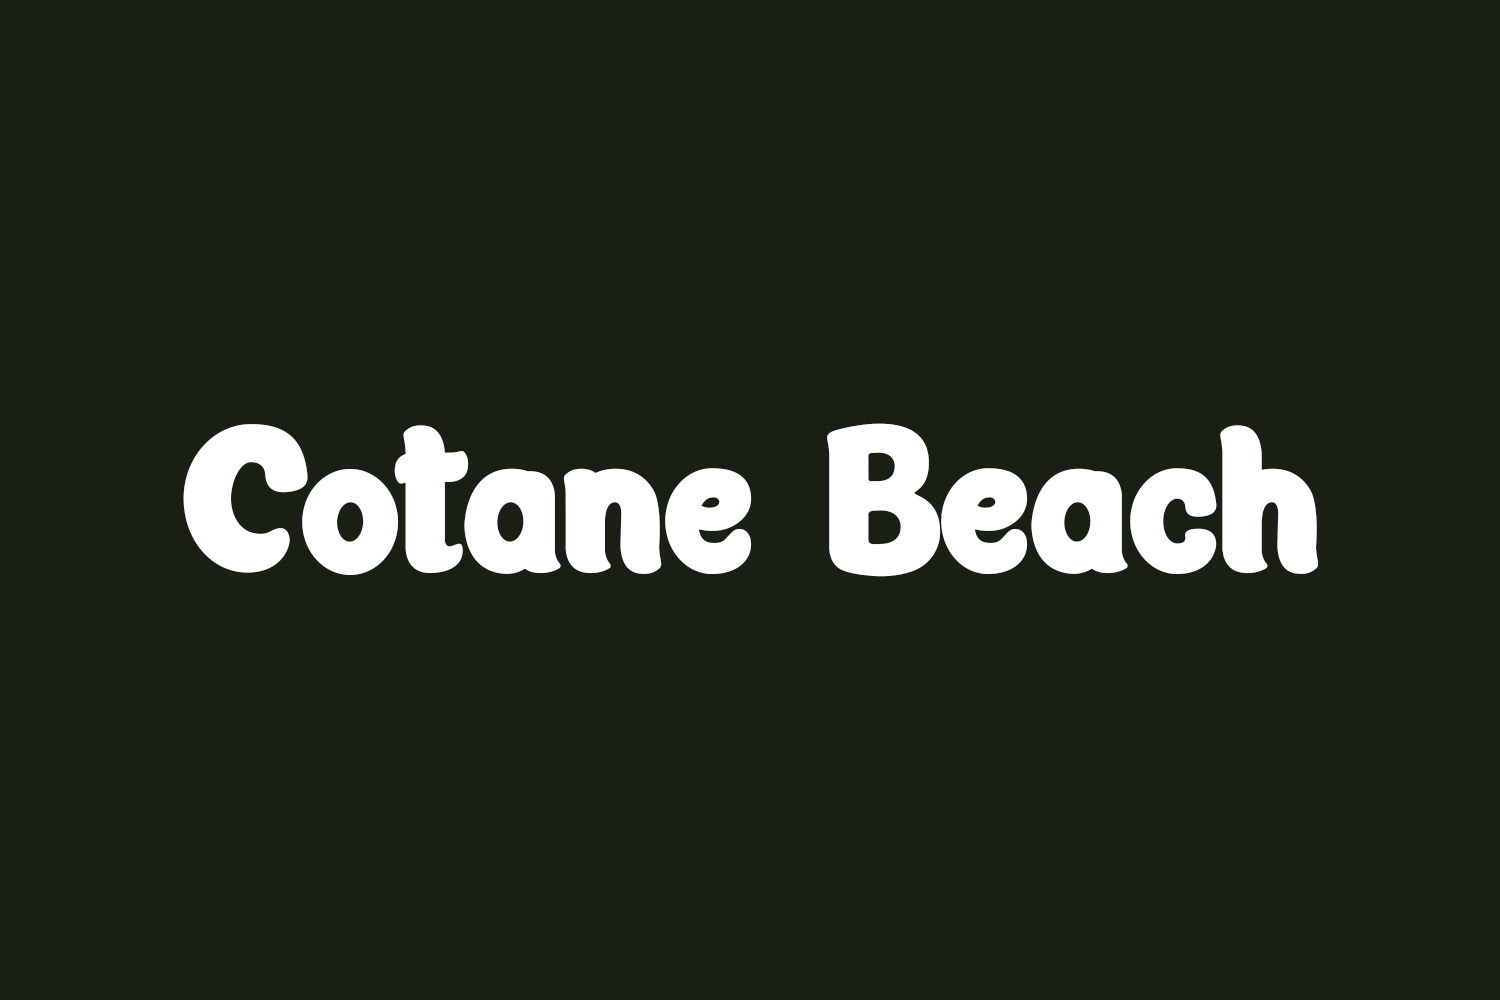 Cotane Beach Free Font